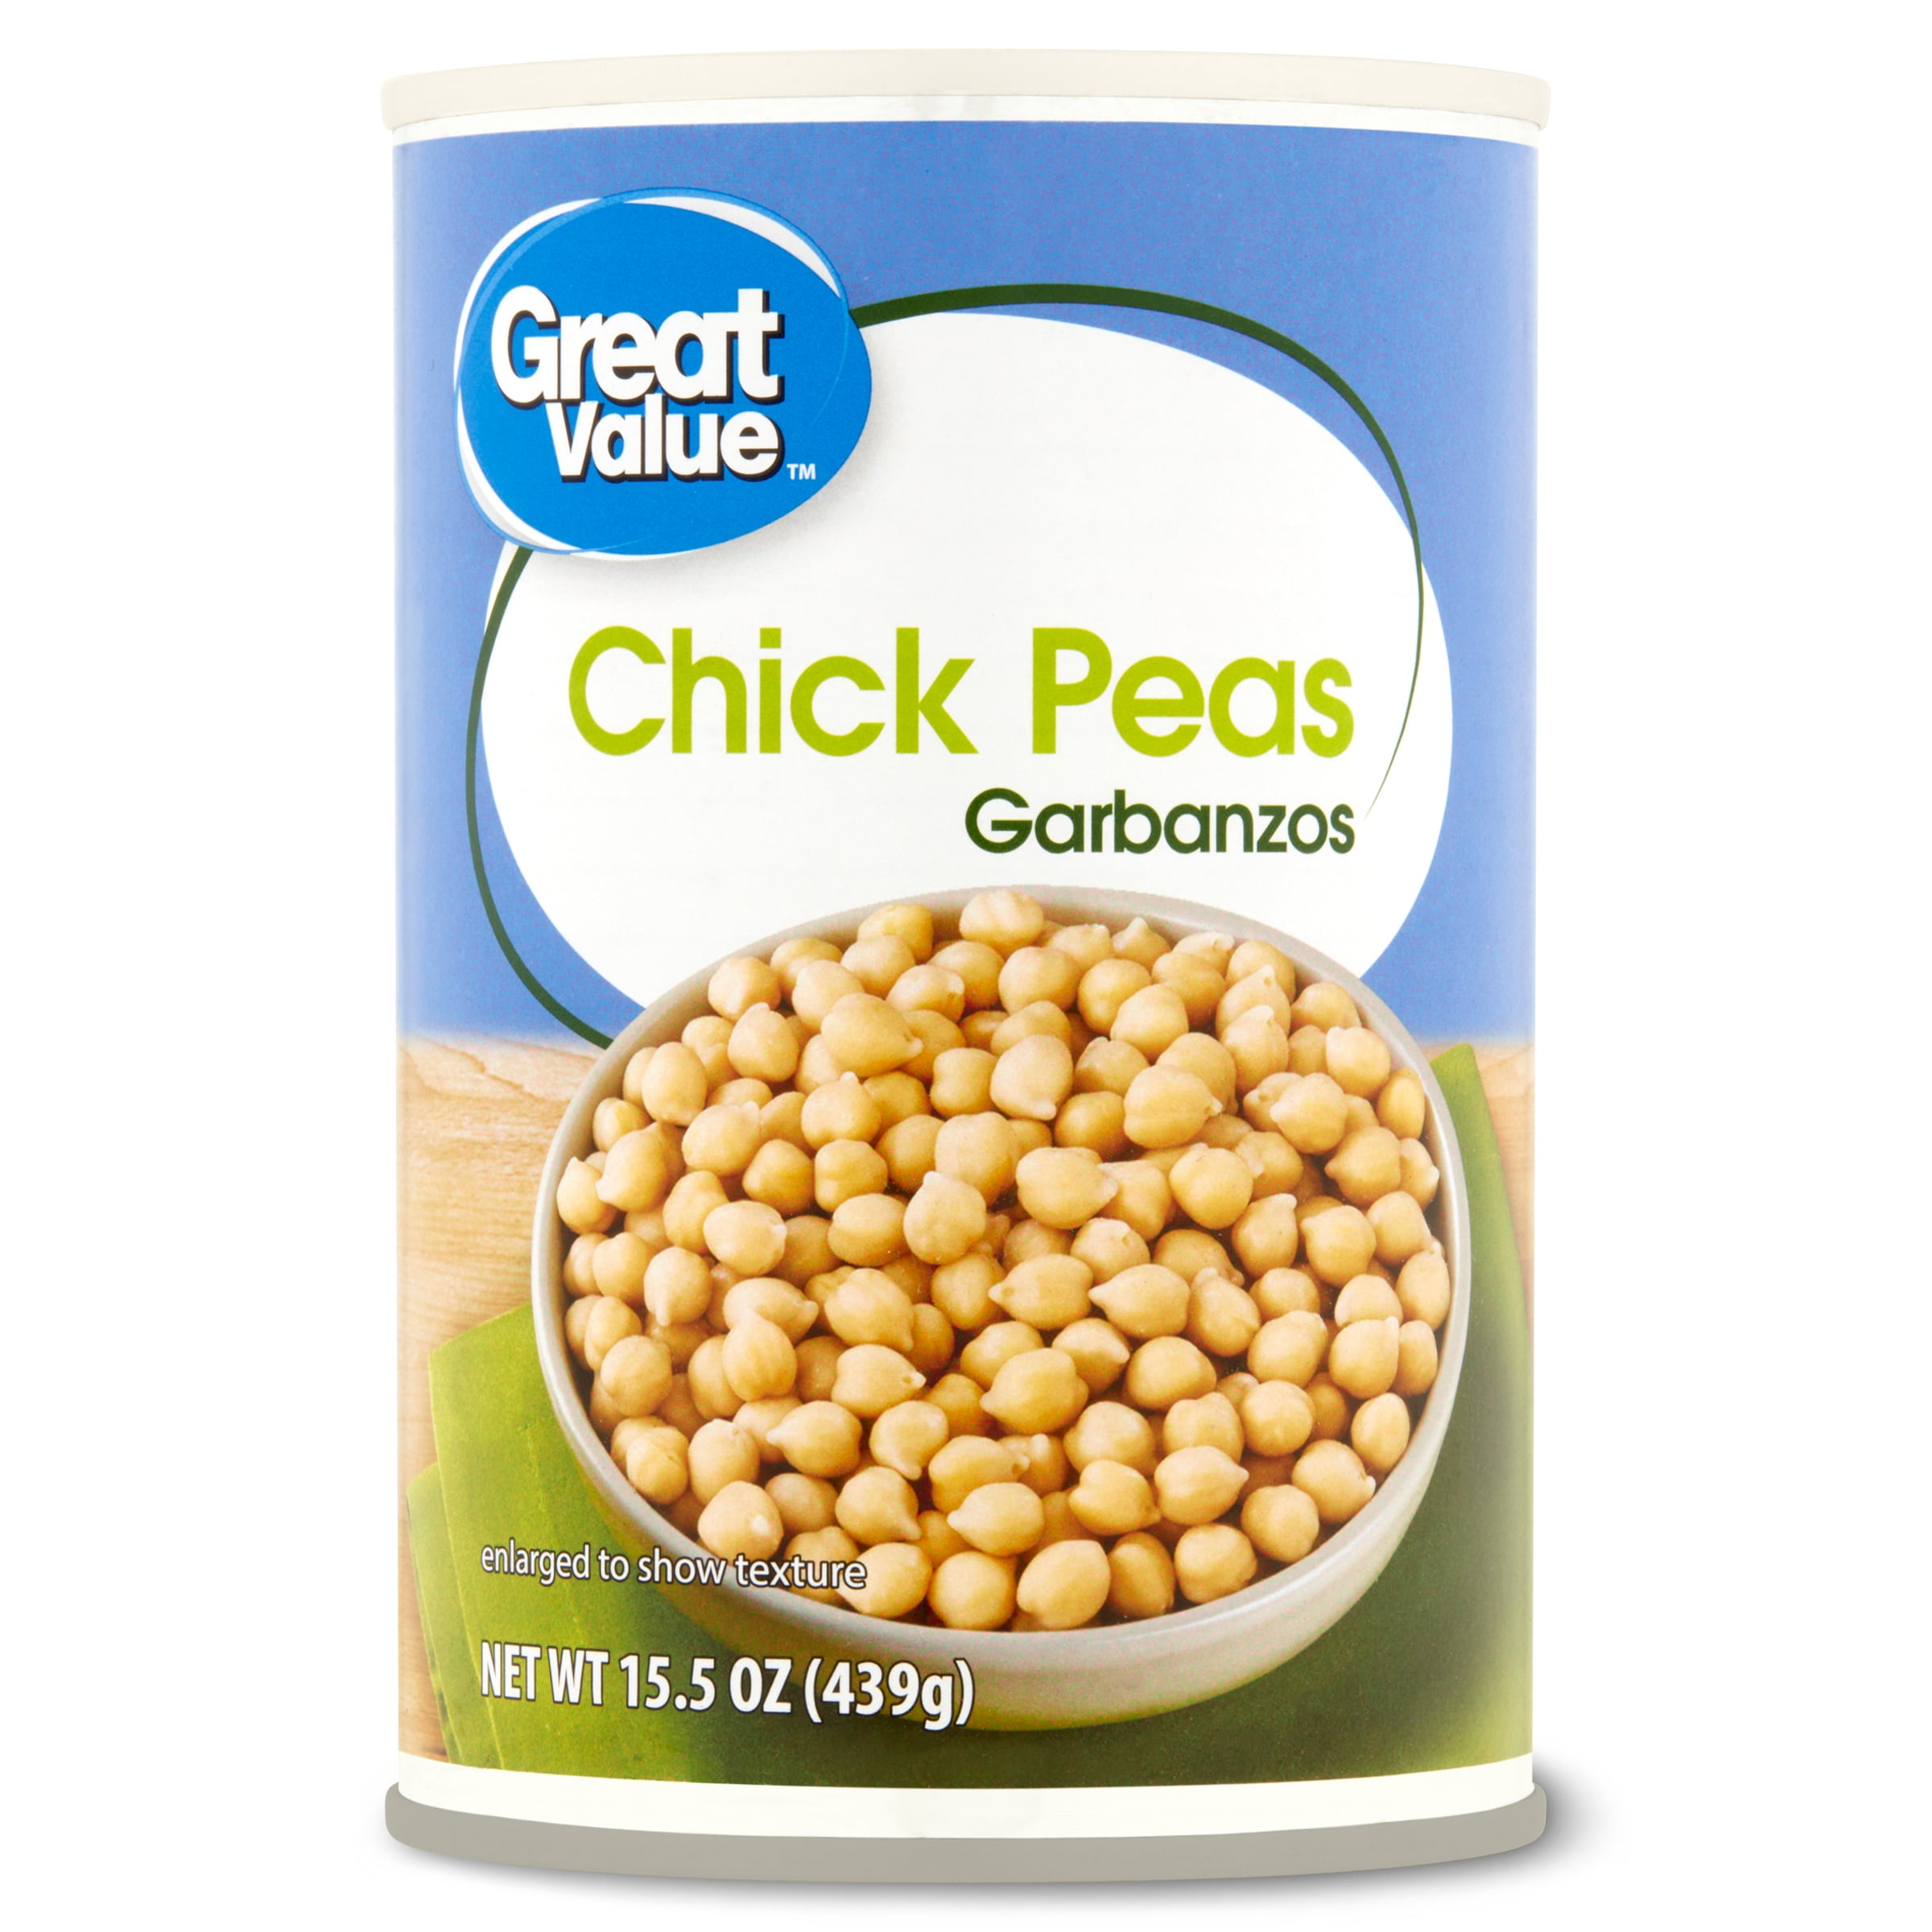 Great Value Garbanzos Chick Peas, 15.5 oz - Walmart.com